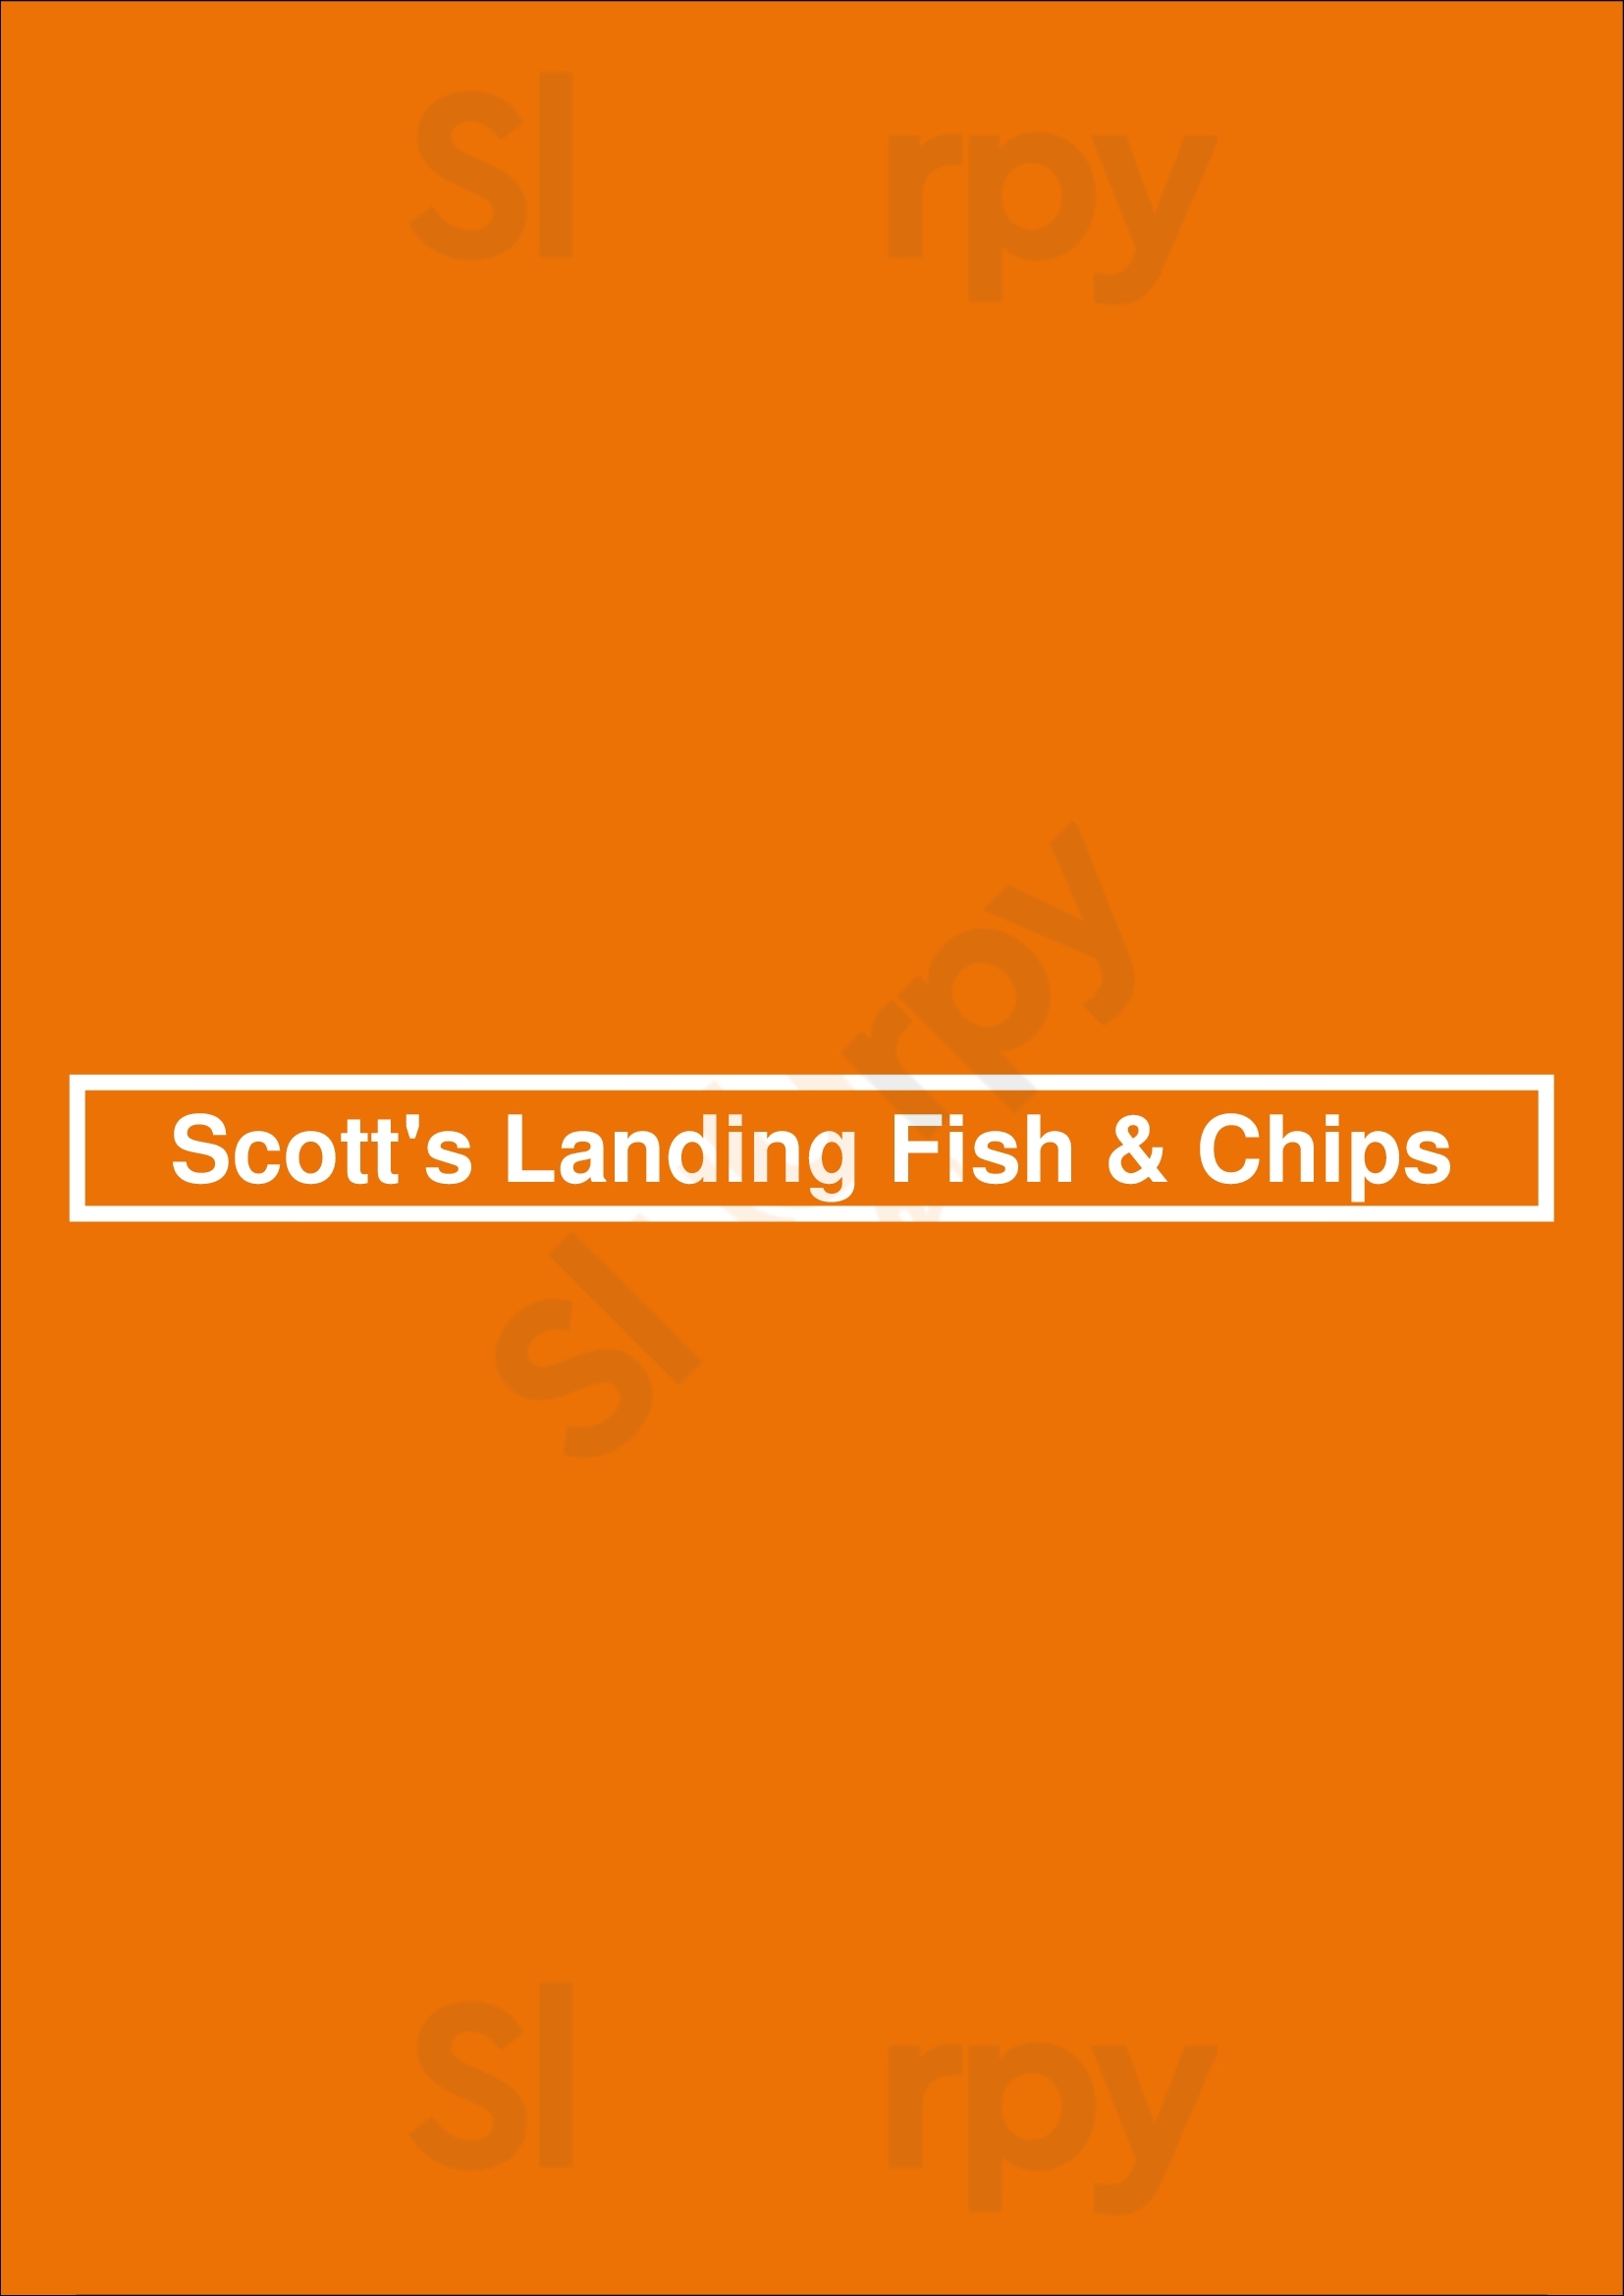 Scott's Landing Fish & Chips Surrey Menu - 1